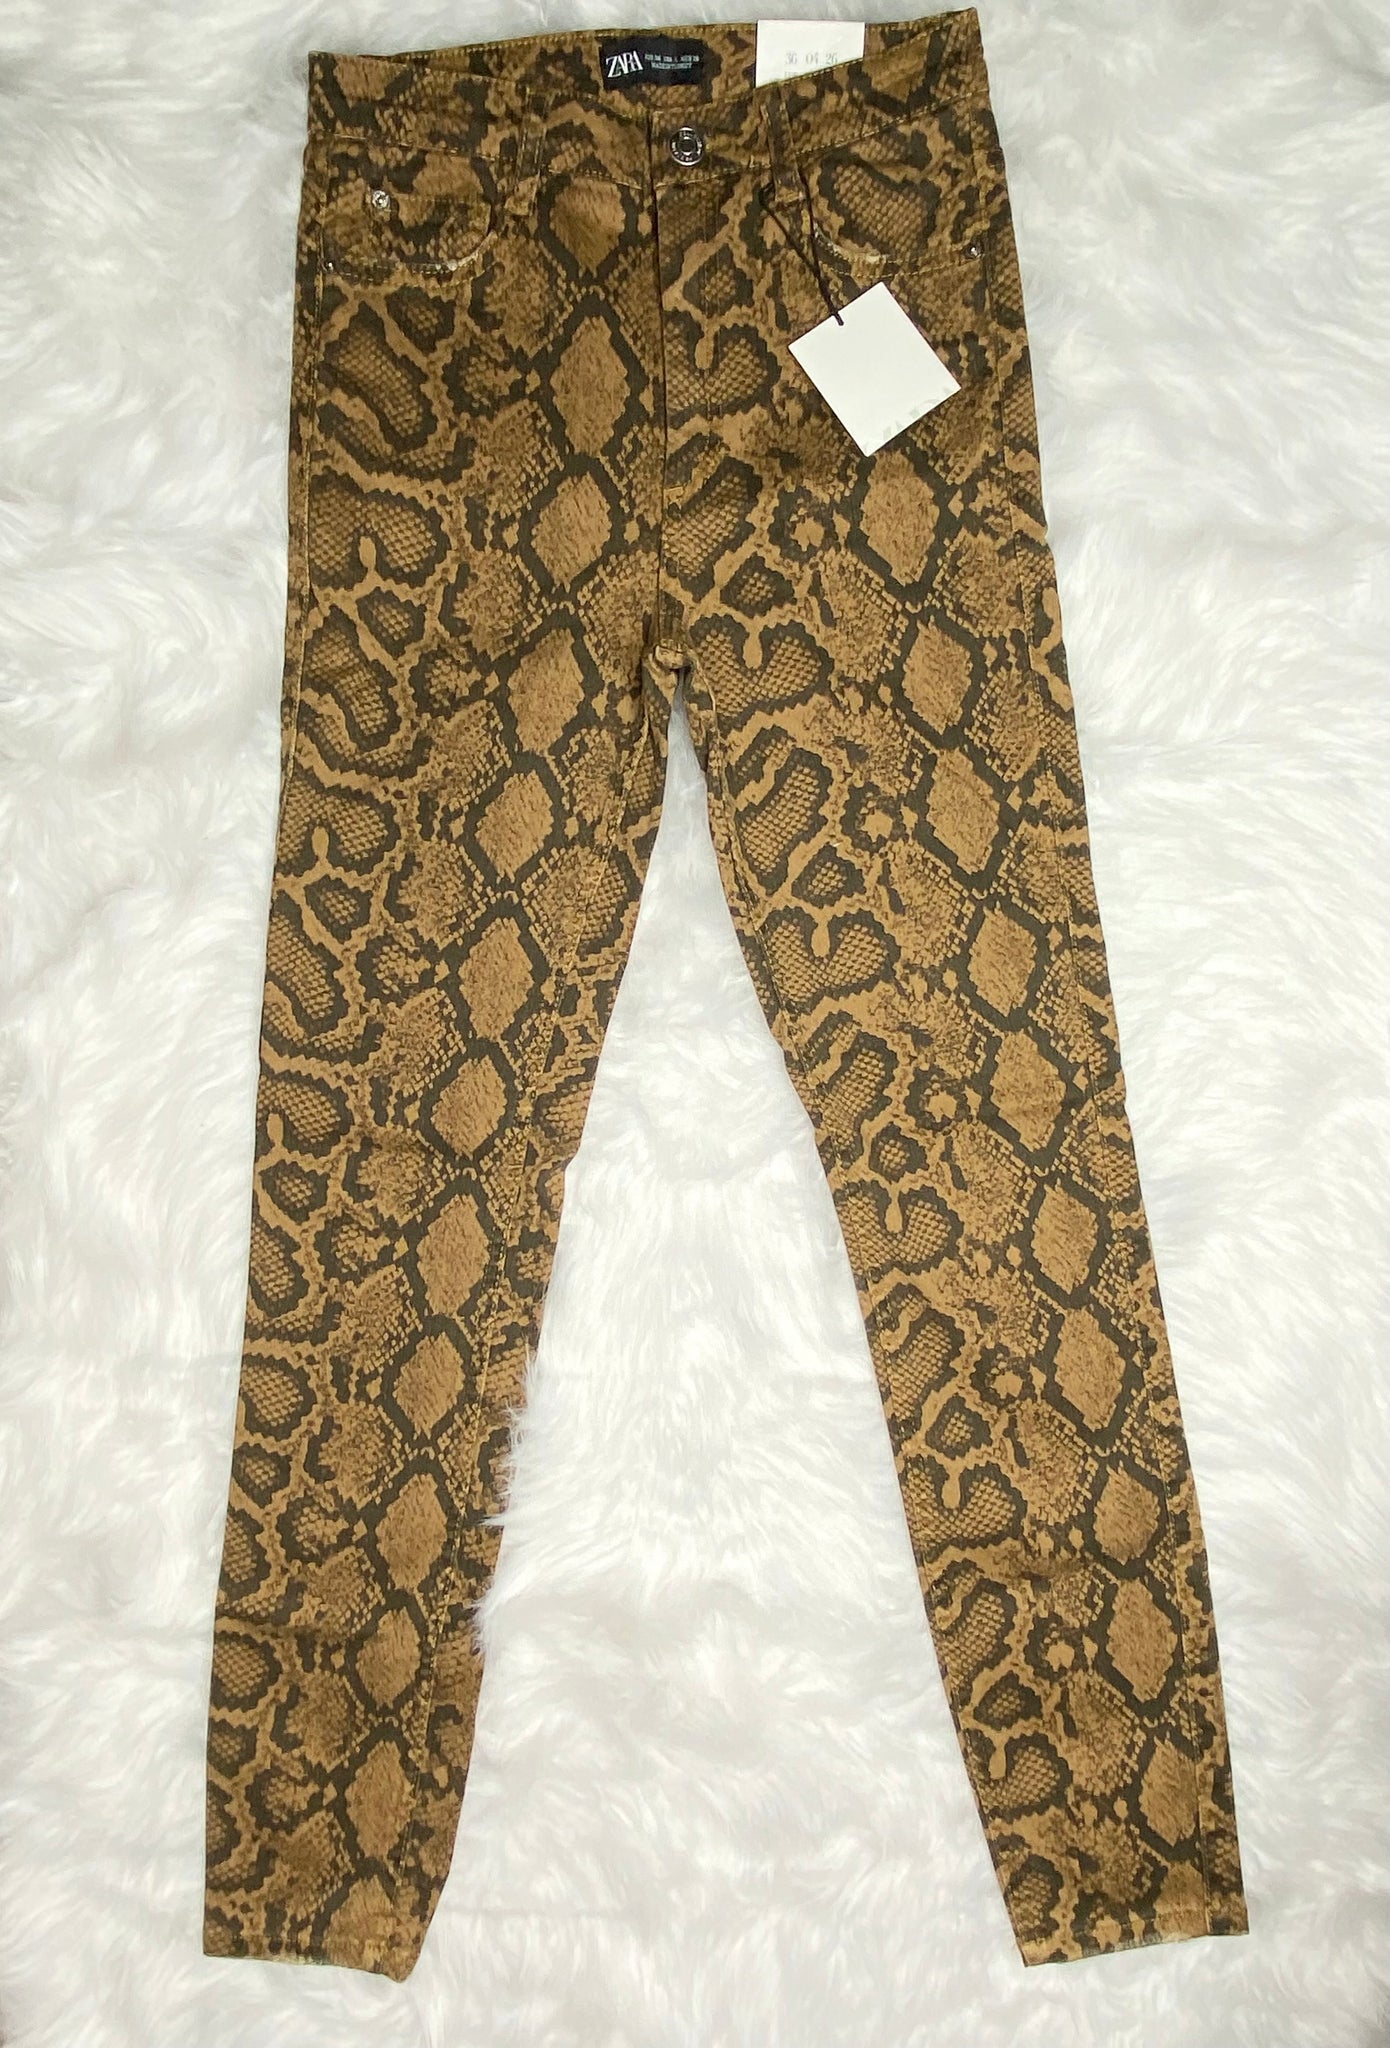 ZARA Leopard print jeans size 10 ZARA Leopard print jeans size 10